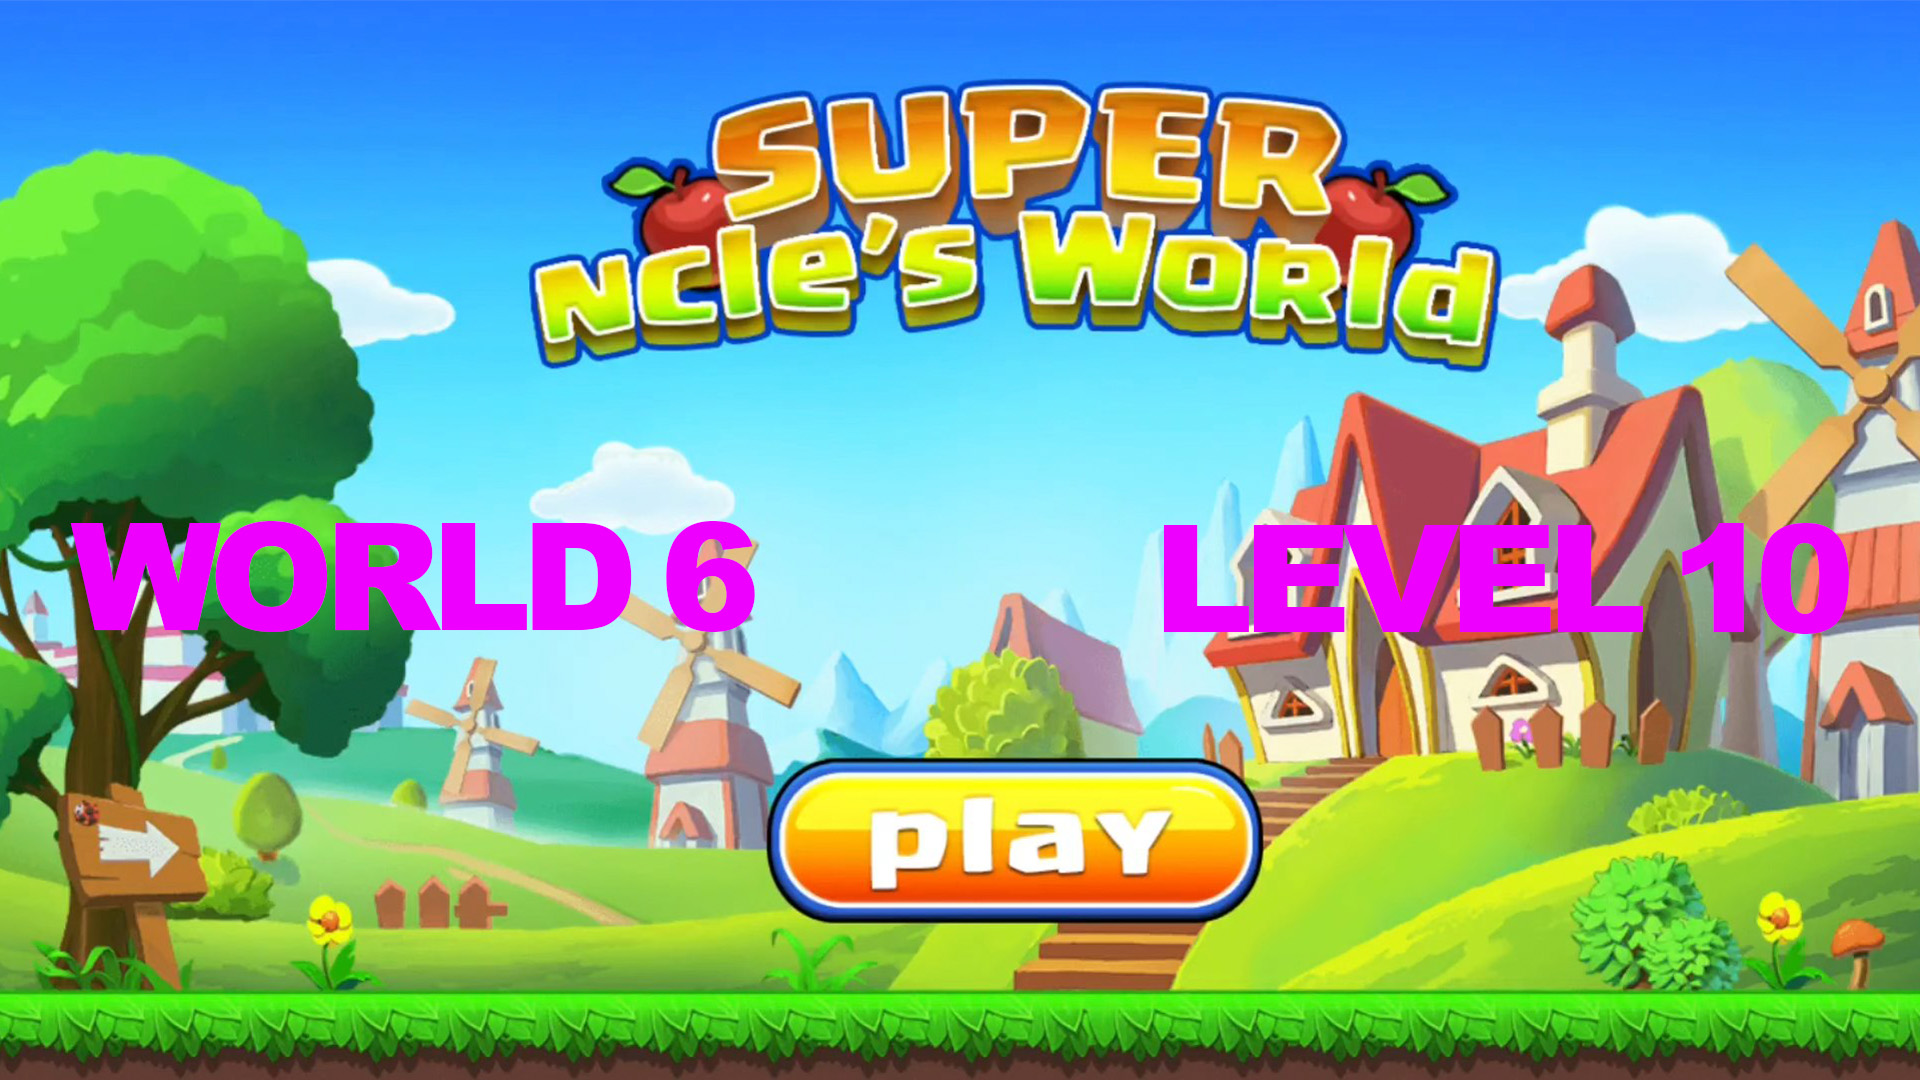 Super ncle's  World 6. Level 10.